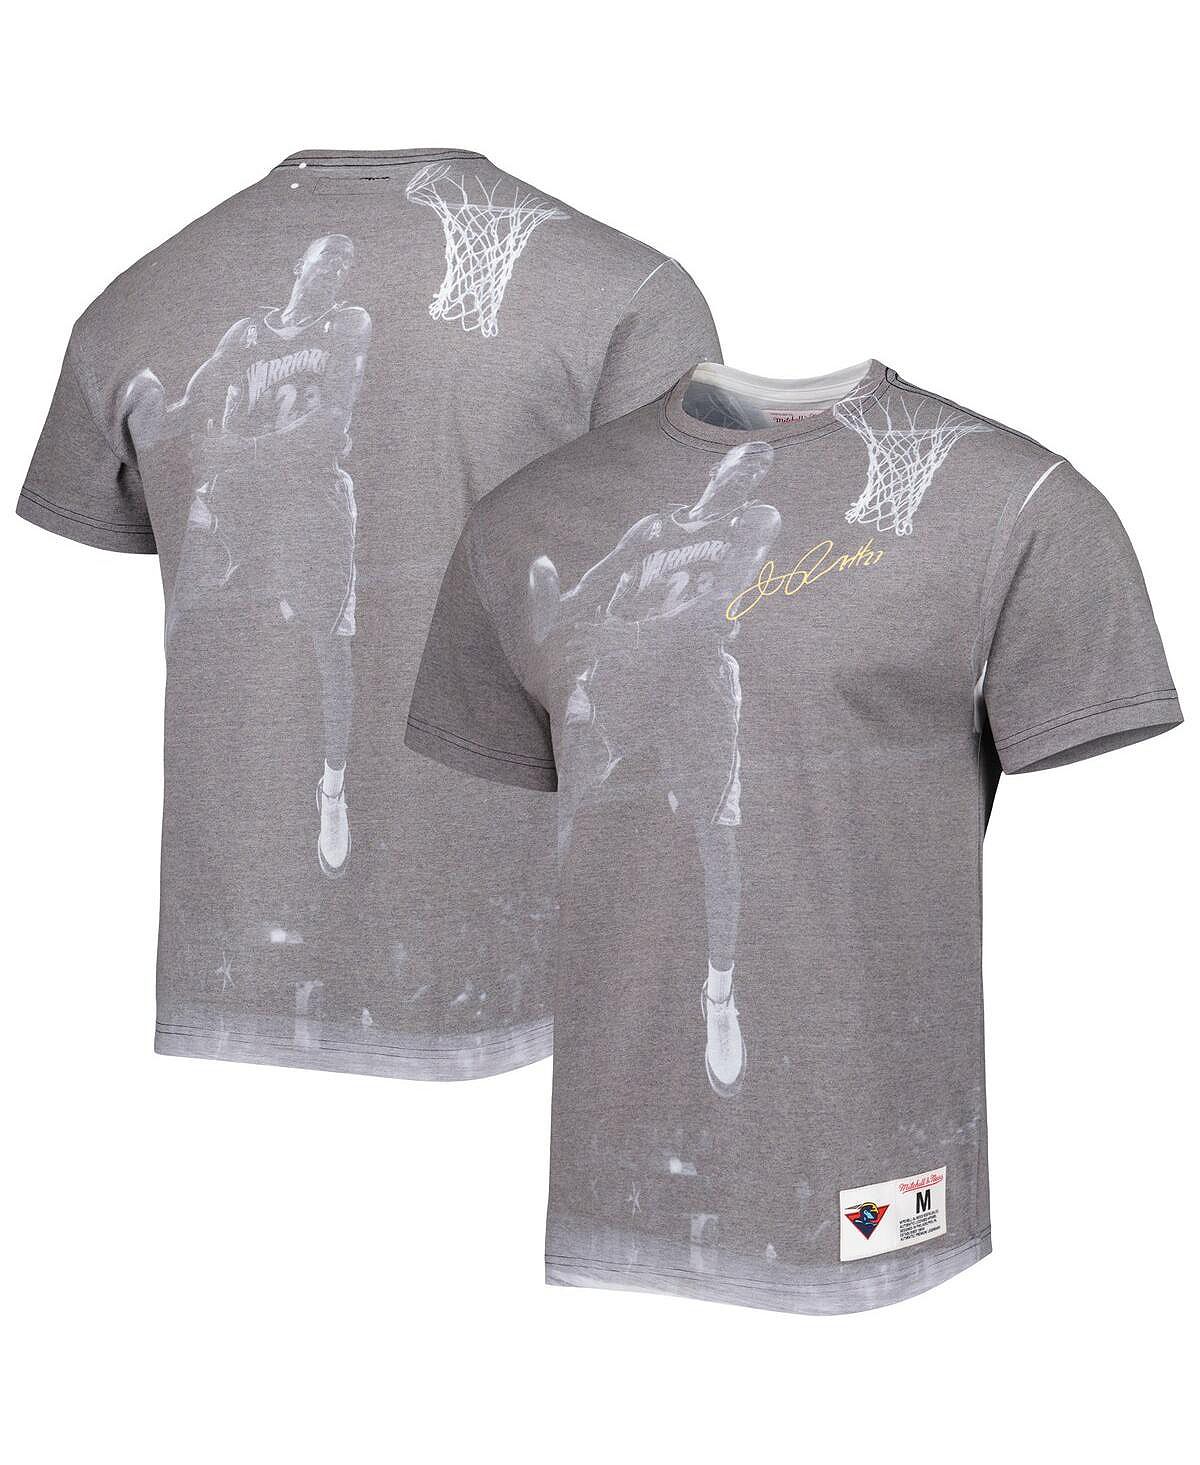 Мужская футболка jason richardson grey golden state warriors above the rim с сублимацией Mitchell & Ness, серый